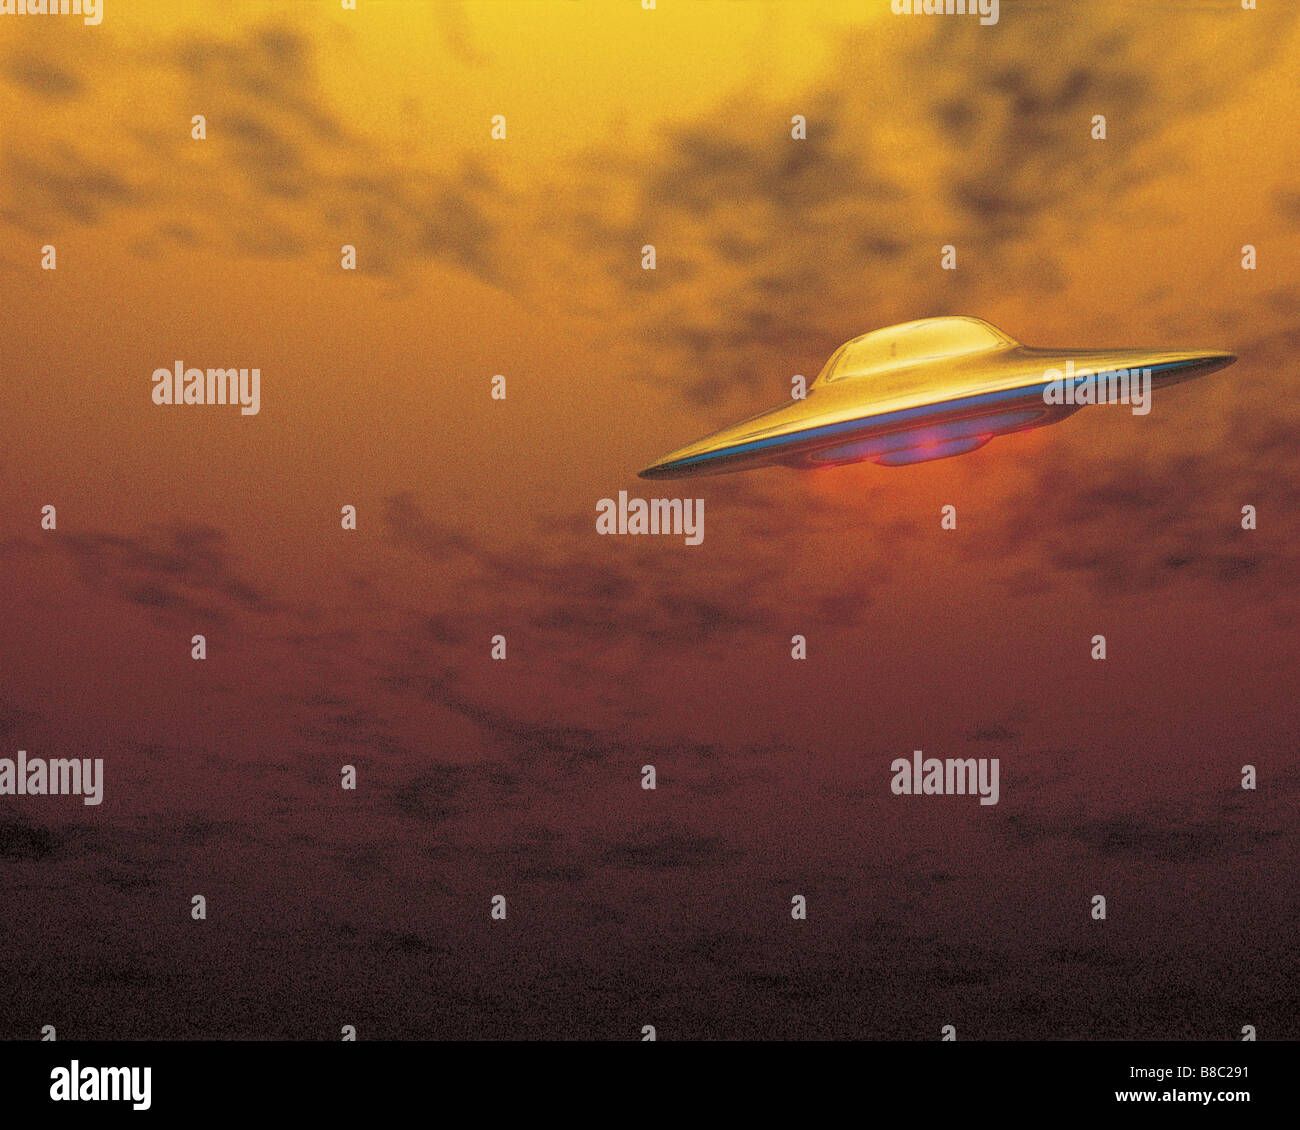 FL5325, Mark Snyder; UFO Flying Through Yellowish Sky Stock Photo